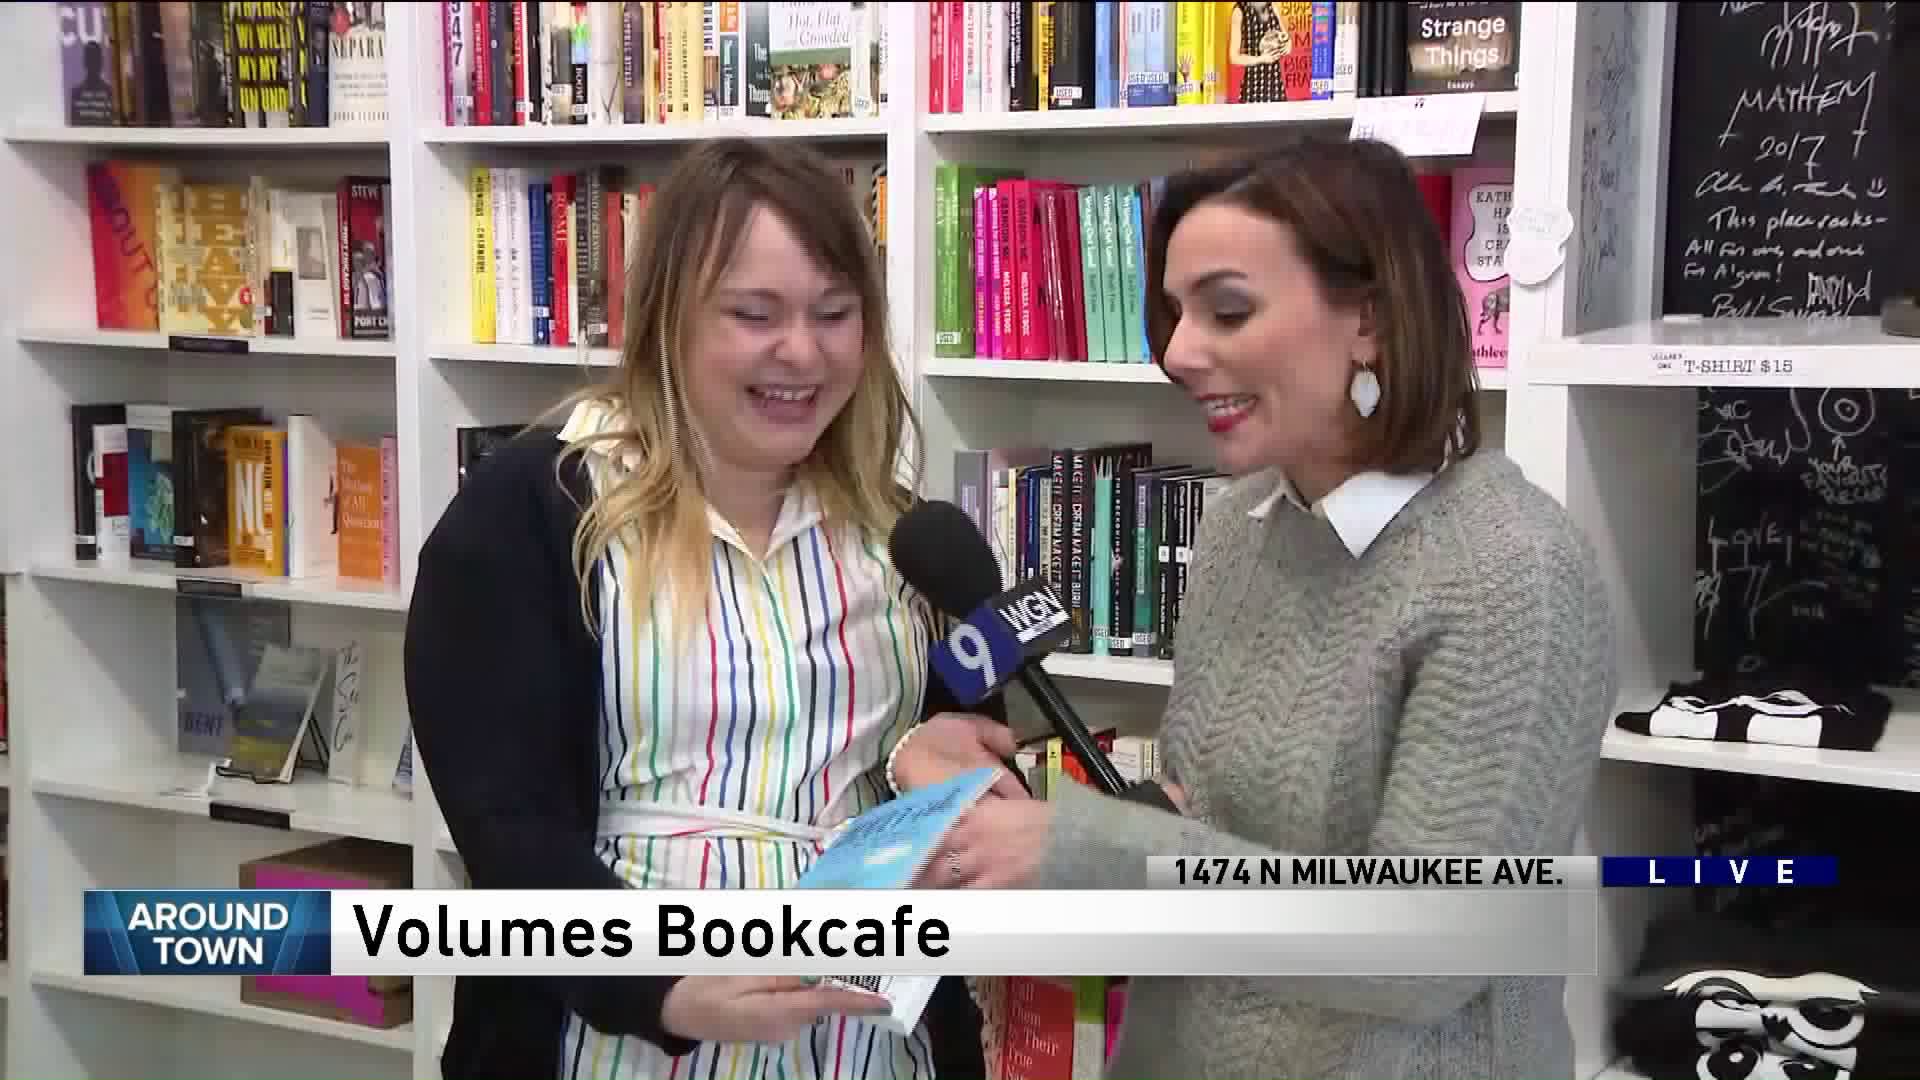 Around Town visits Volumes Bookcafe